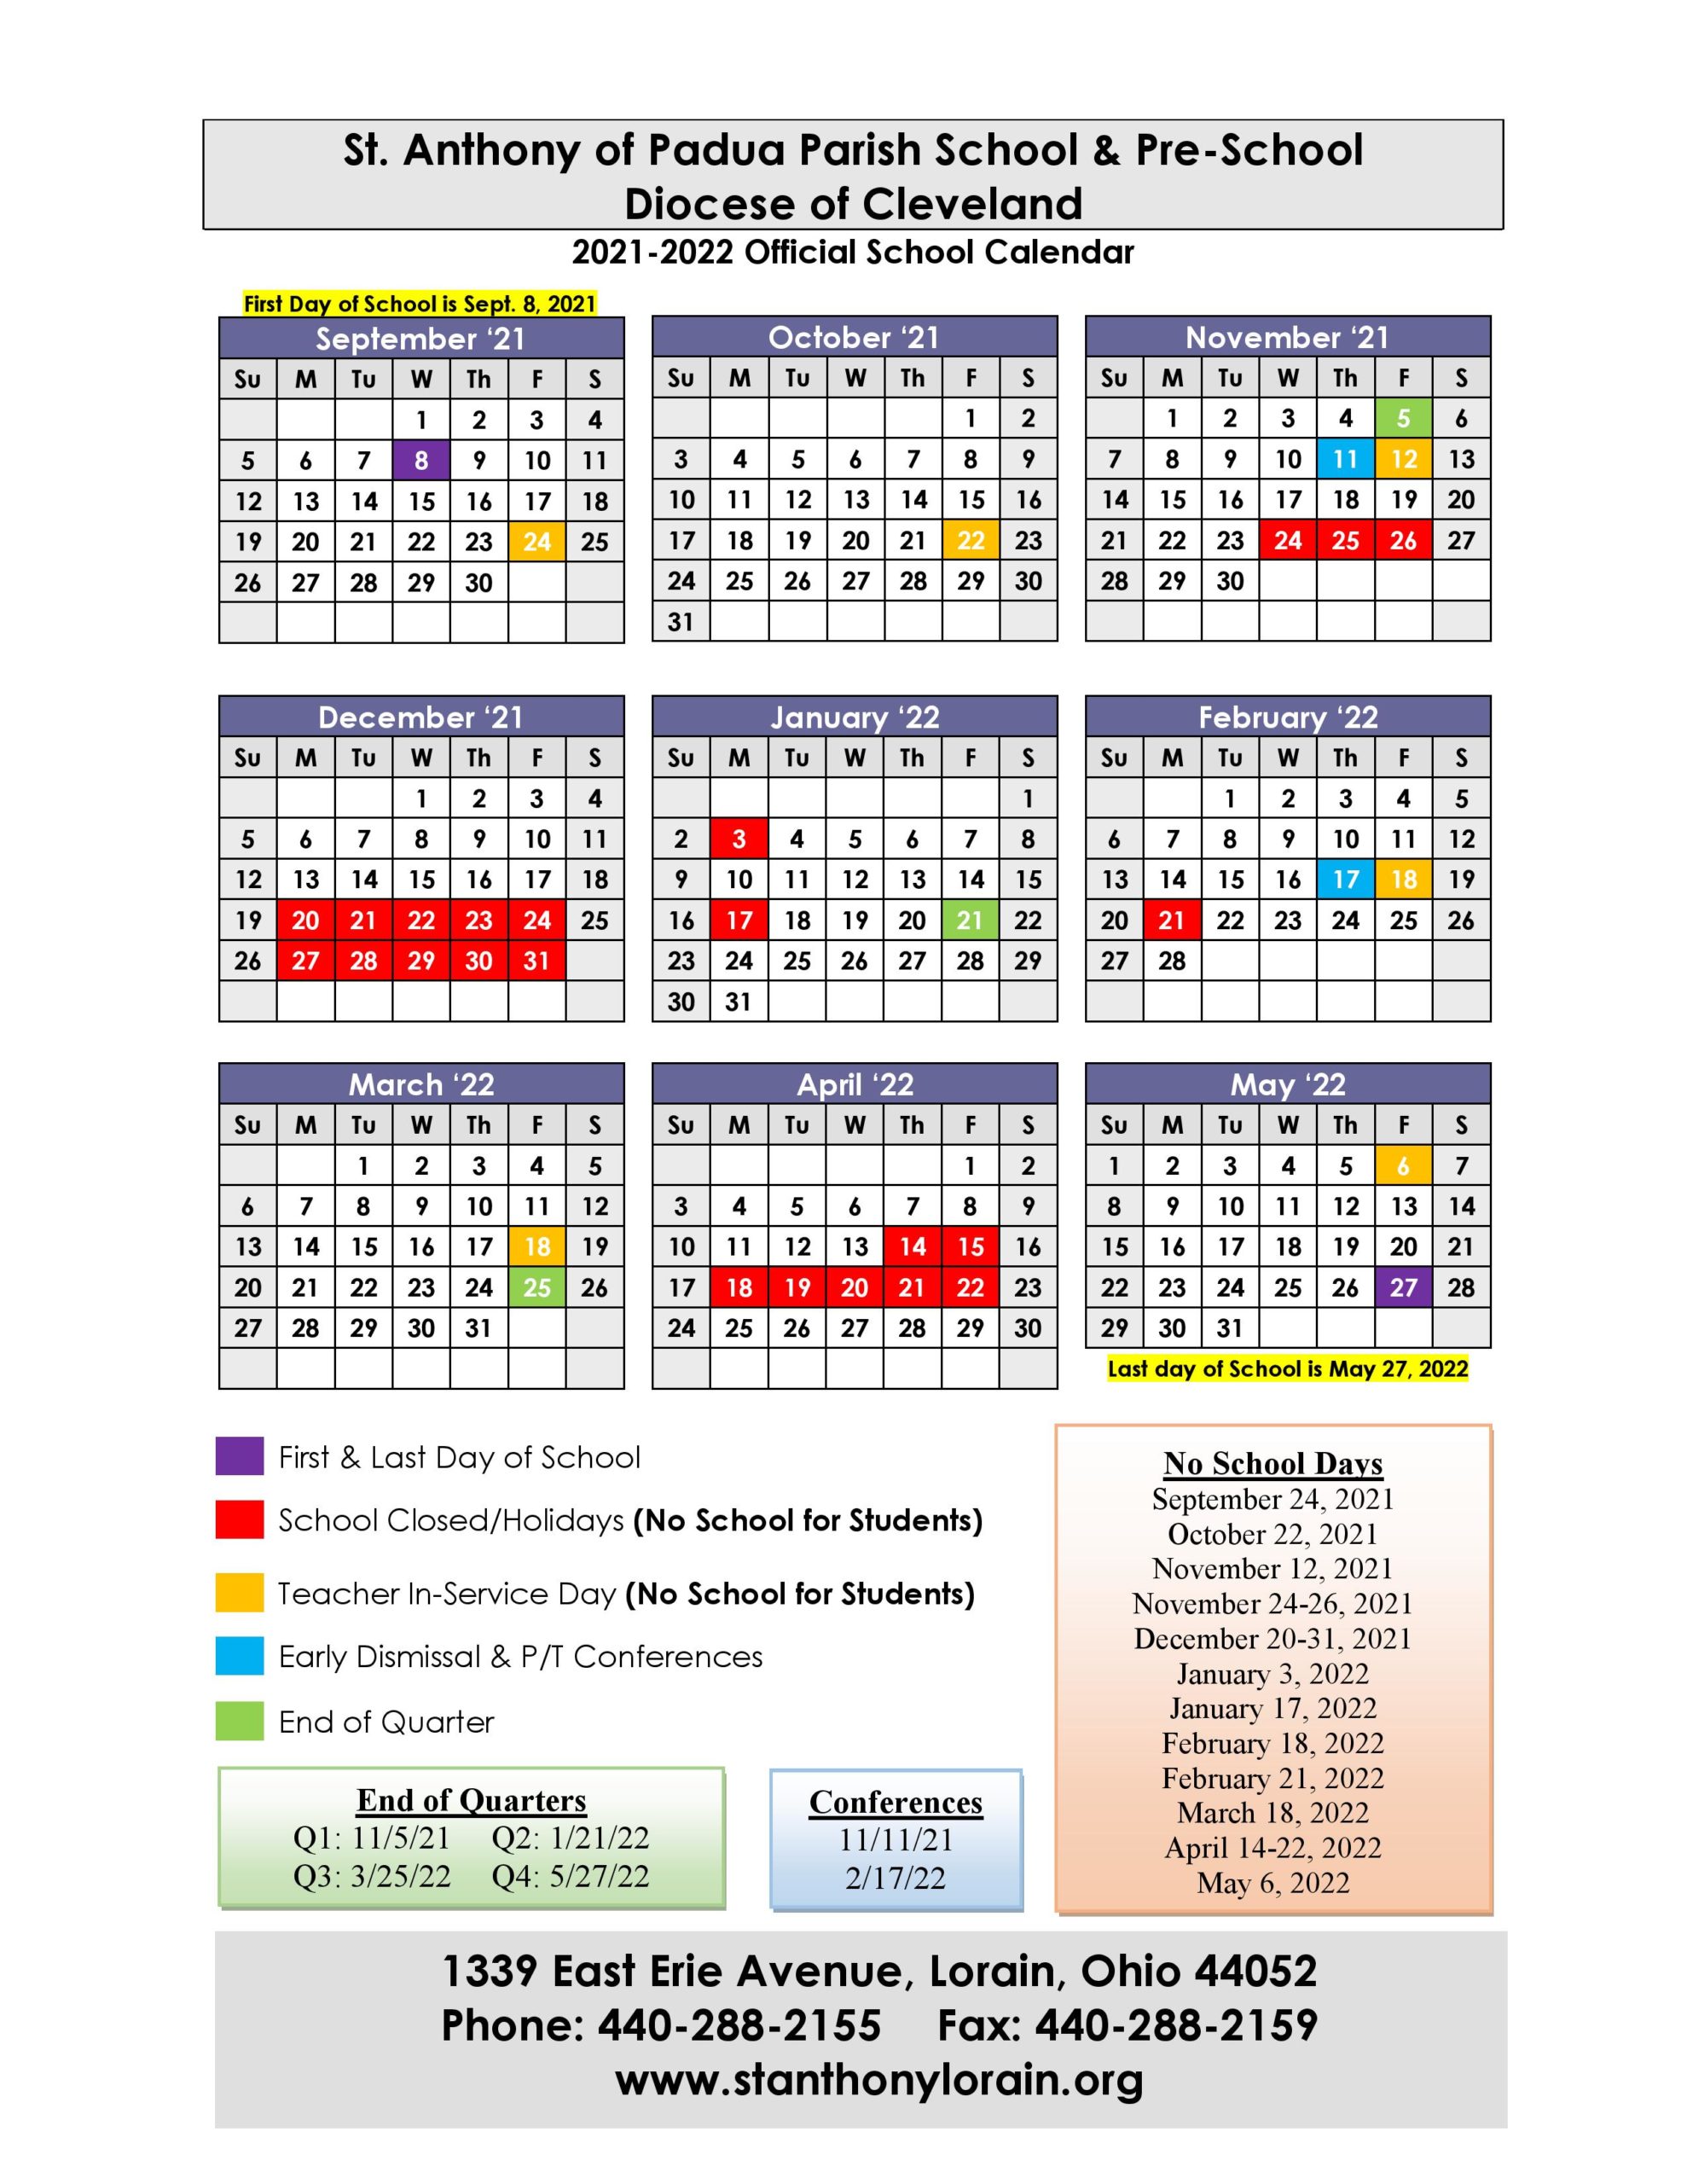 calendar-archives-st-anthony-of-padua-catholic-parish-school-preschoo